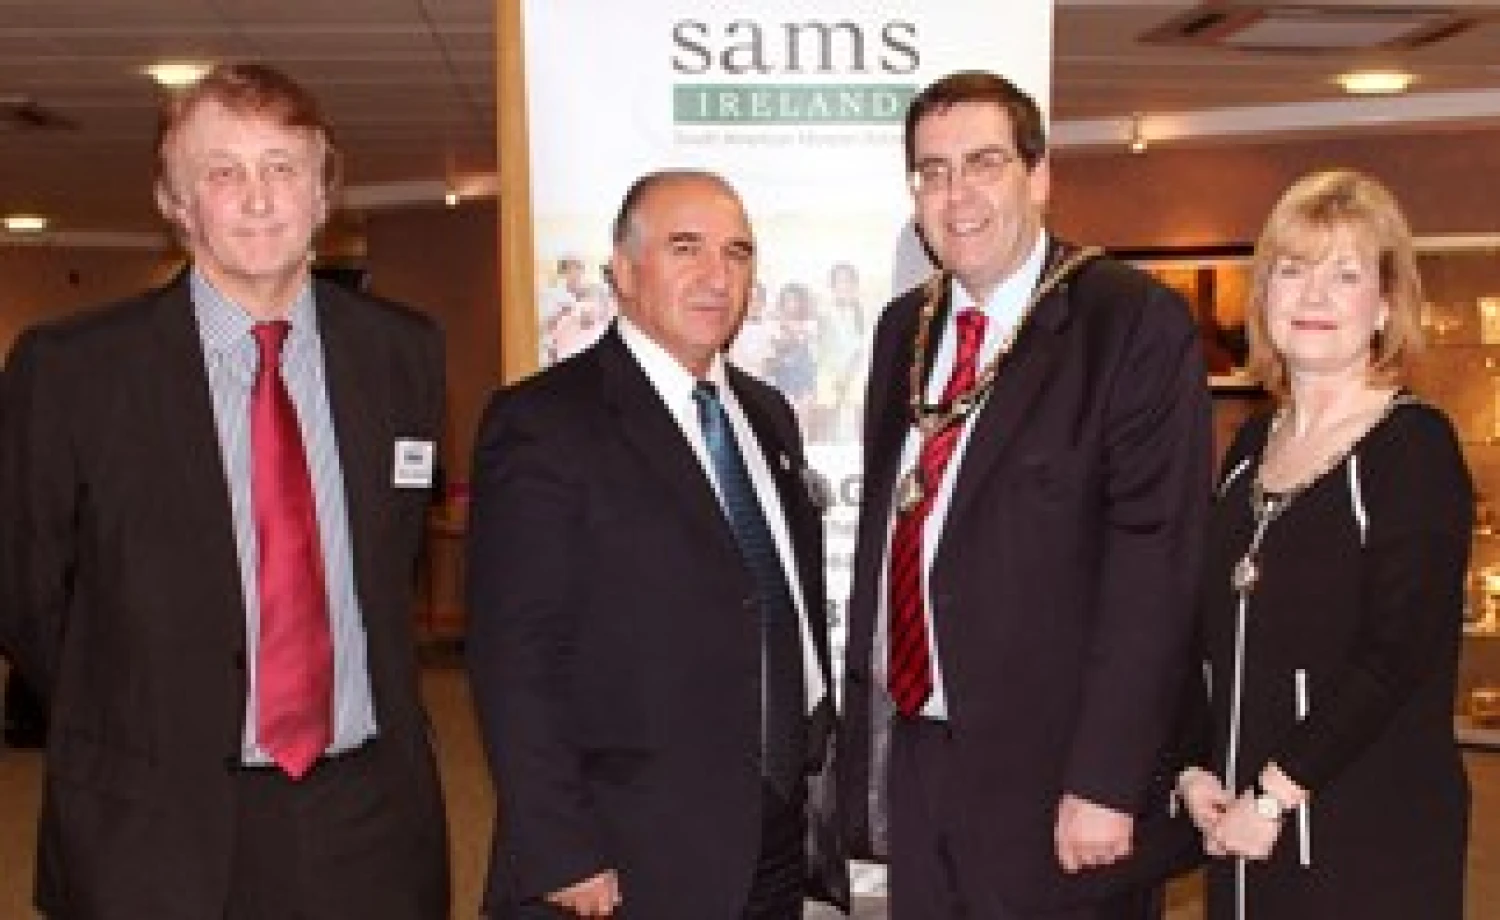 Miner's visit to SAMS event draws hundreds